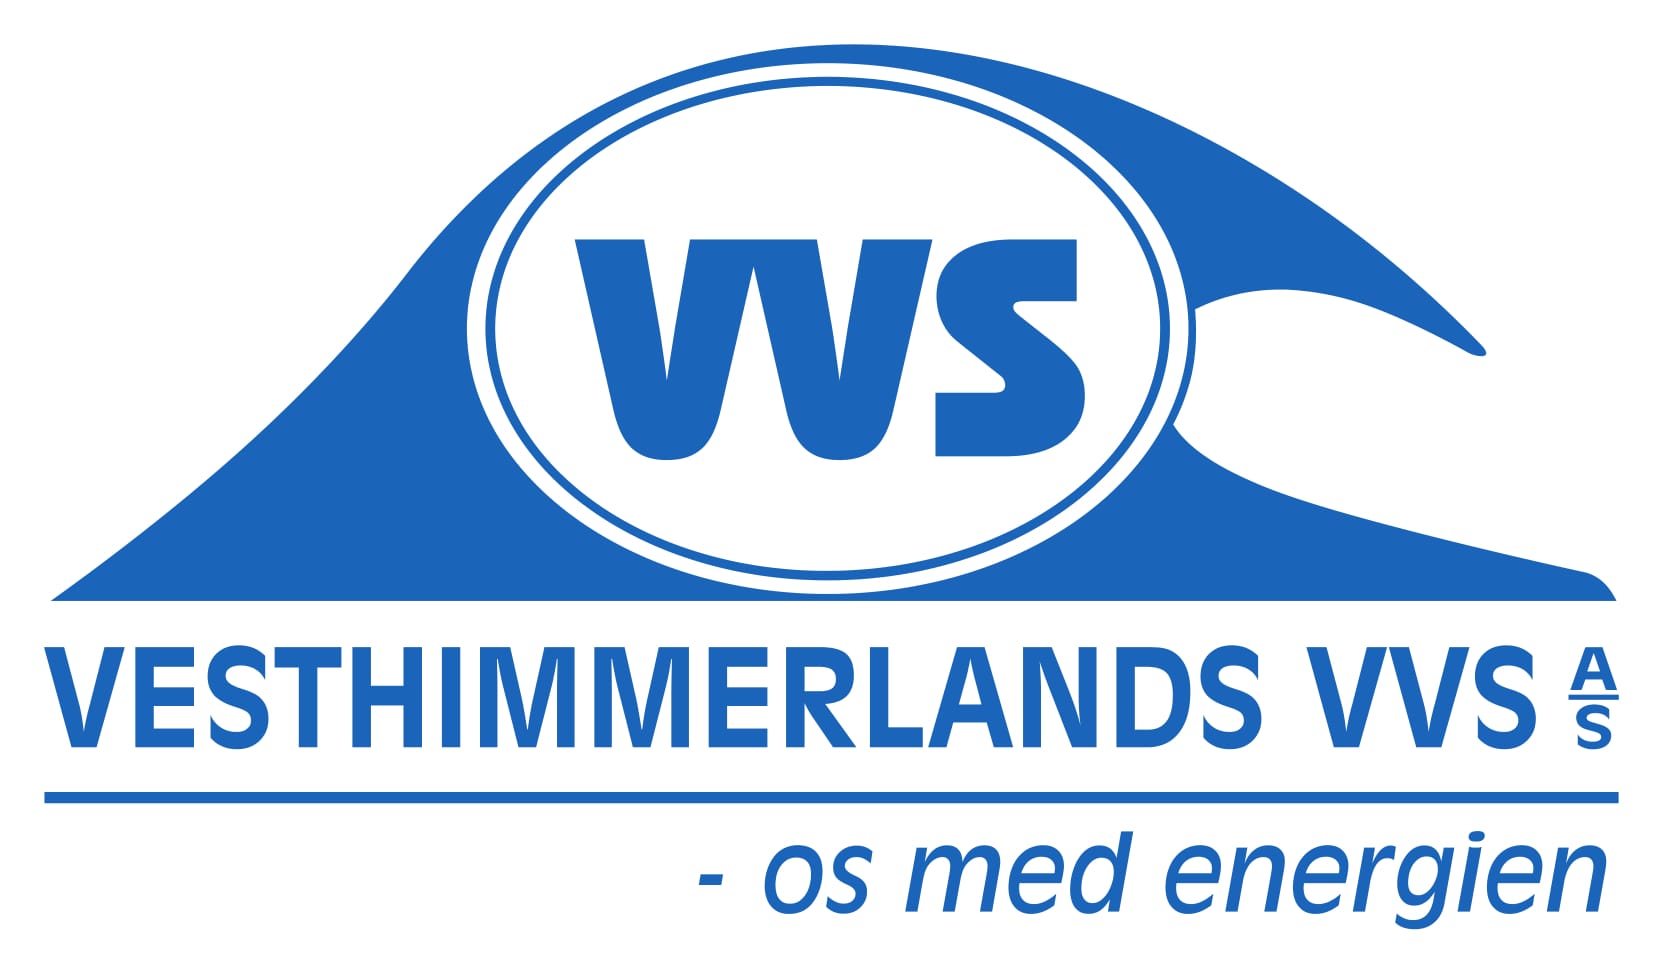 Vesthimmerland VVS